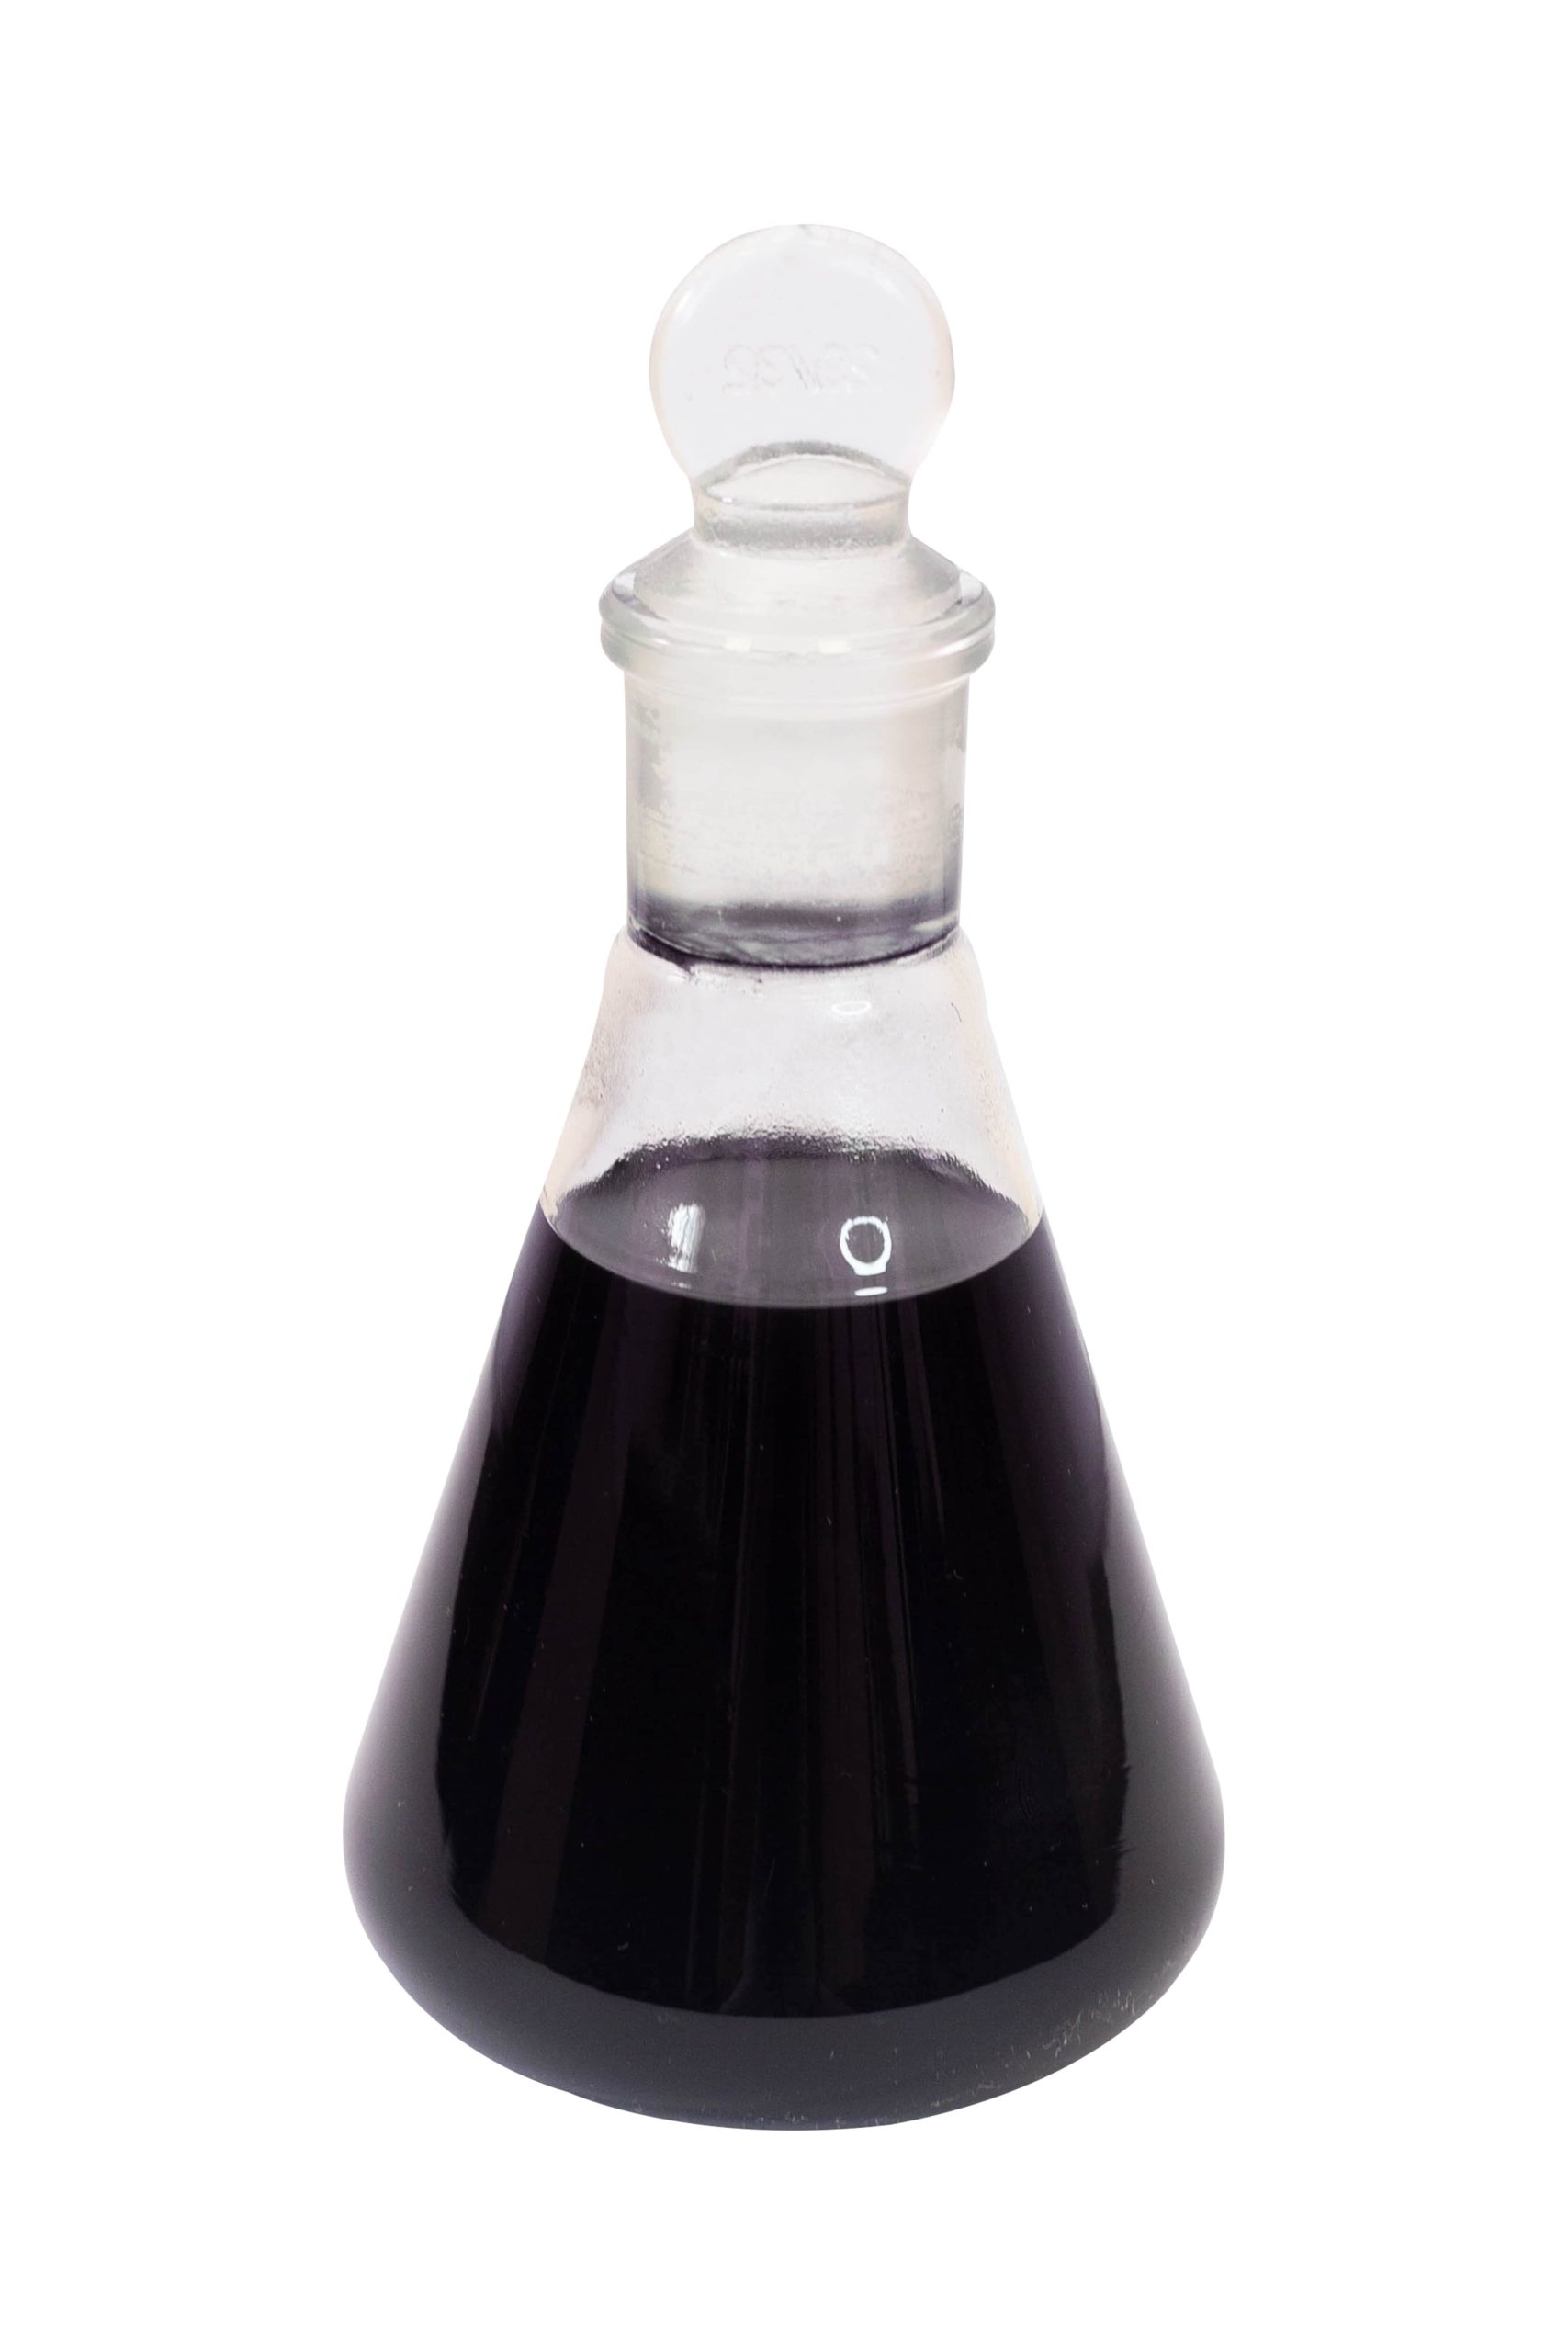 Liquid thiokol grade II